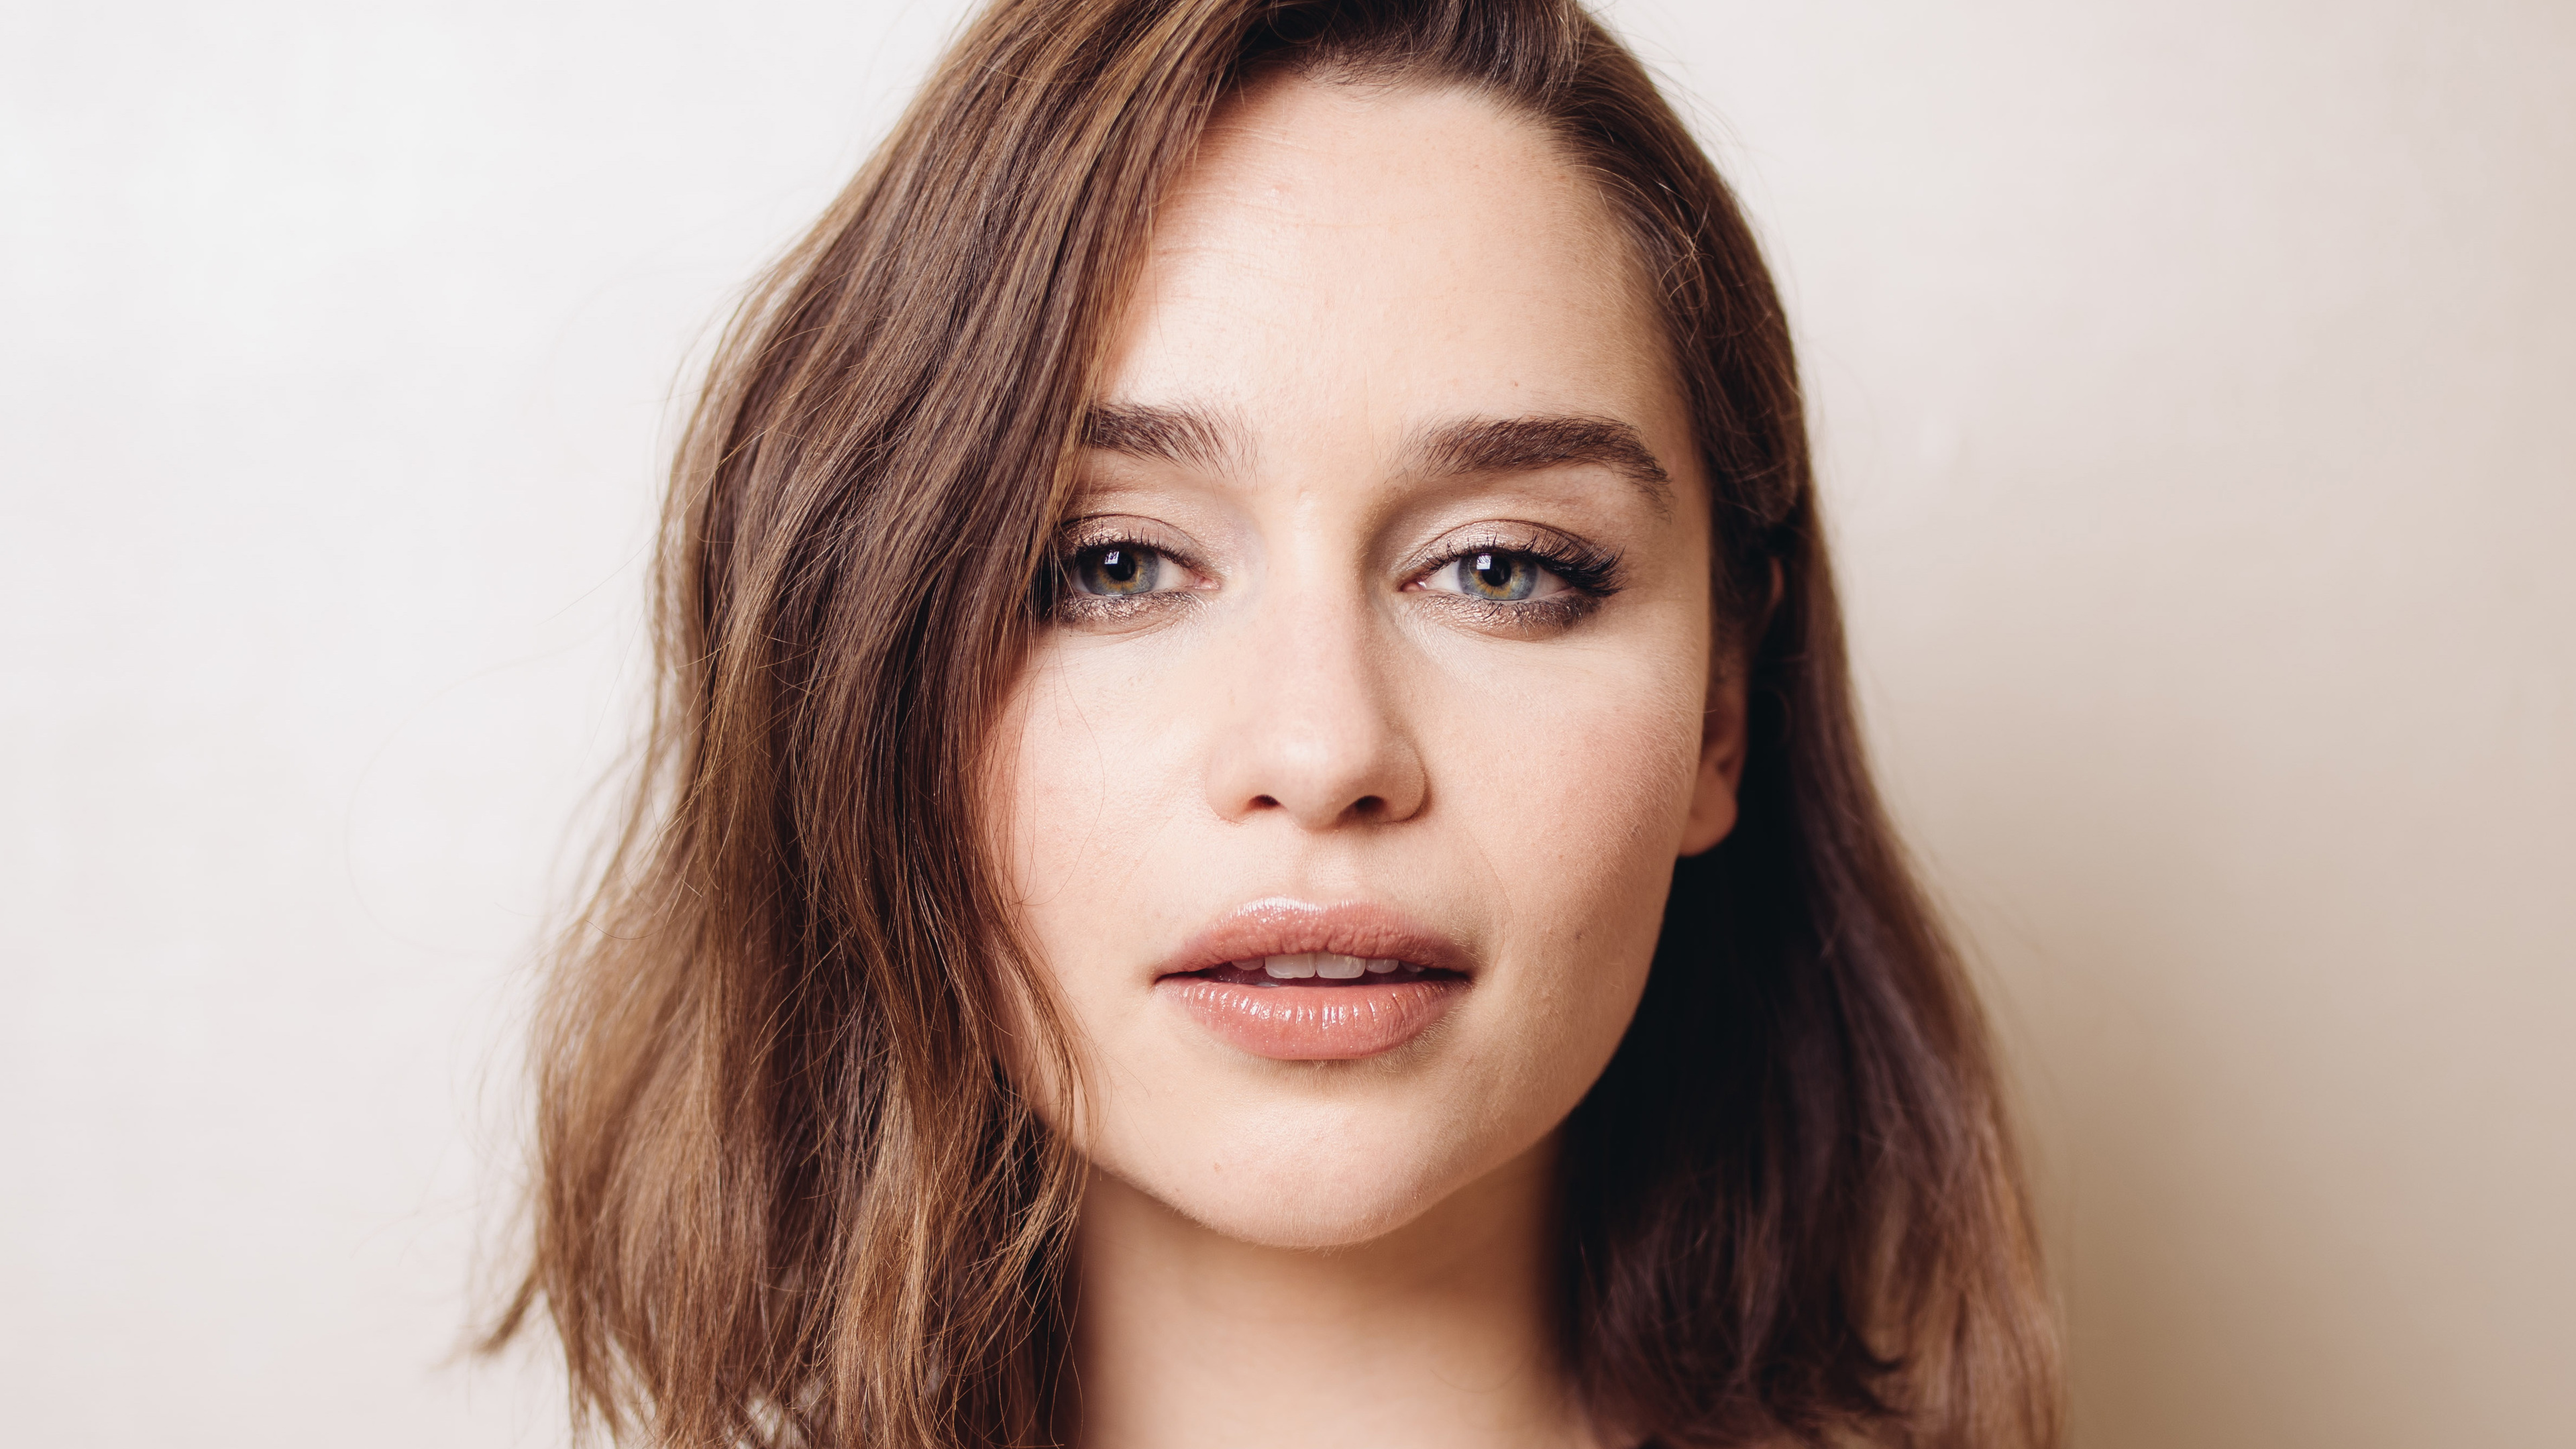 Emilia Clarke 2019 Wallpapers